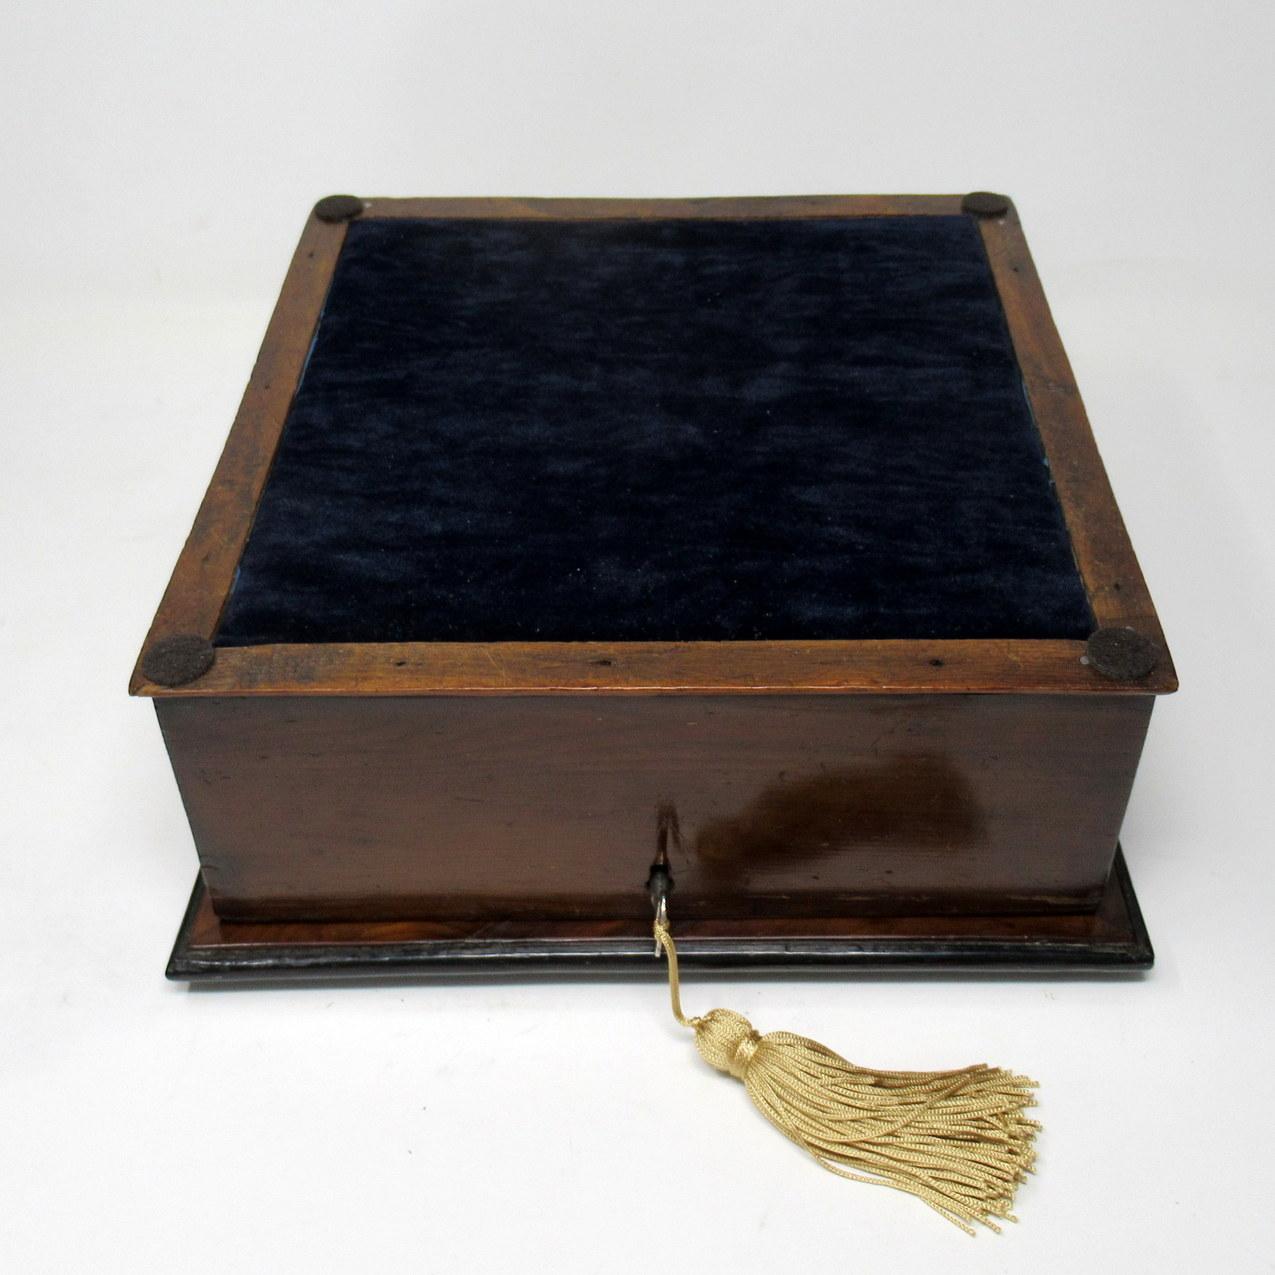 Inlay Irish Killarney Kerry Arbutus Wood Antique Jewelry Casket Box Mid-19th Century